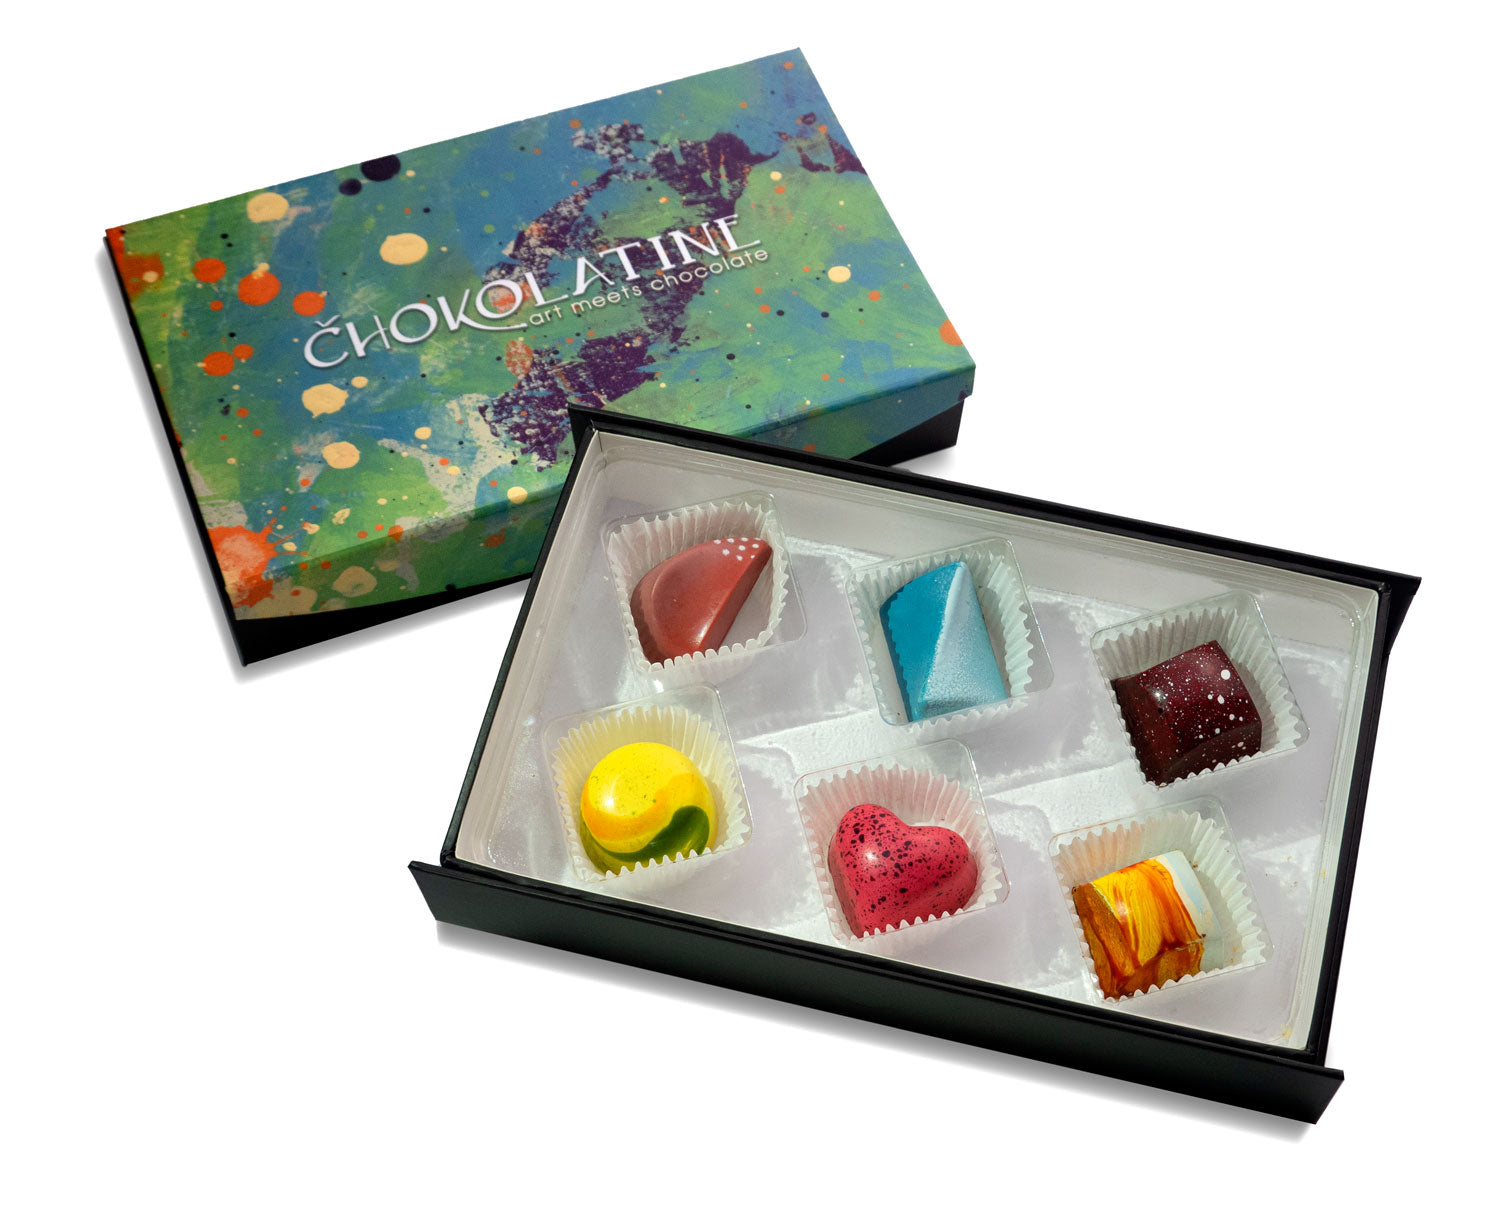 Chokolatine - Hand painted, gourmet chocolates in a 6-piece gift box